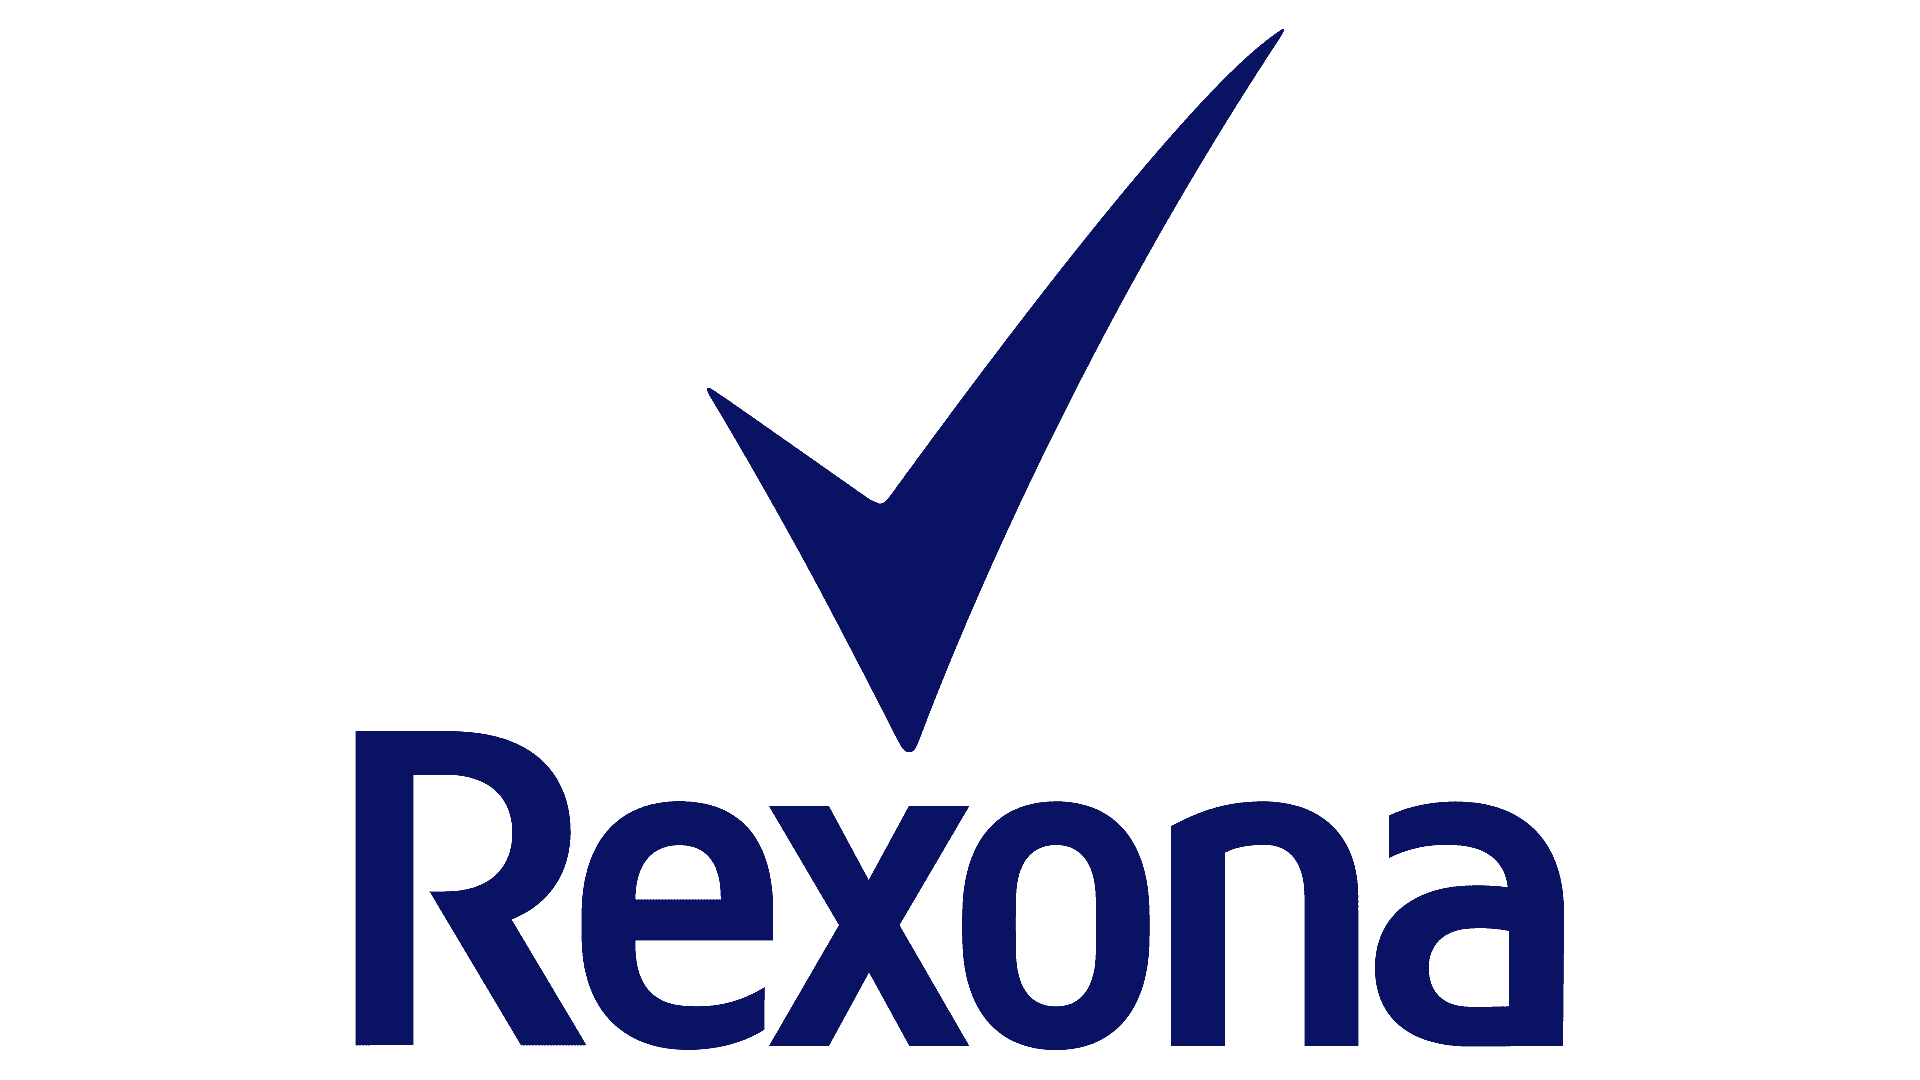 Brand: Rexona